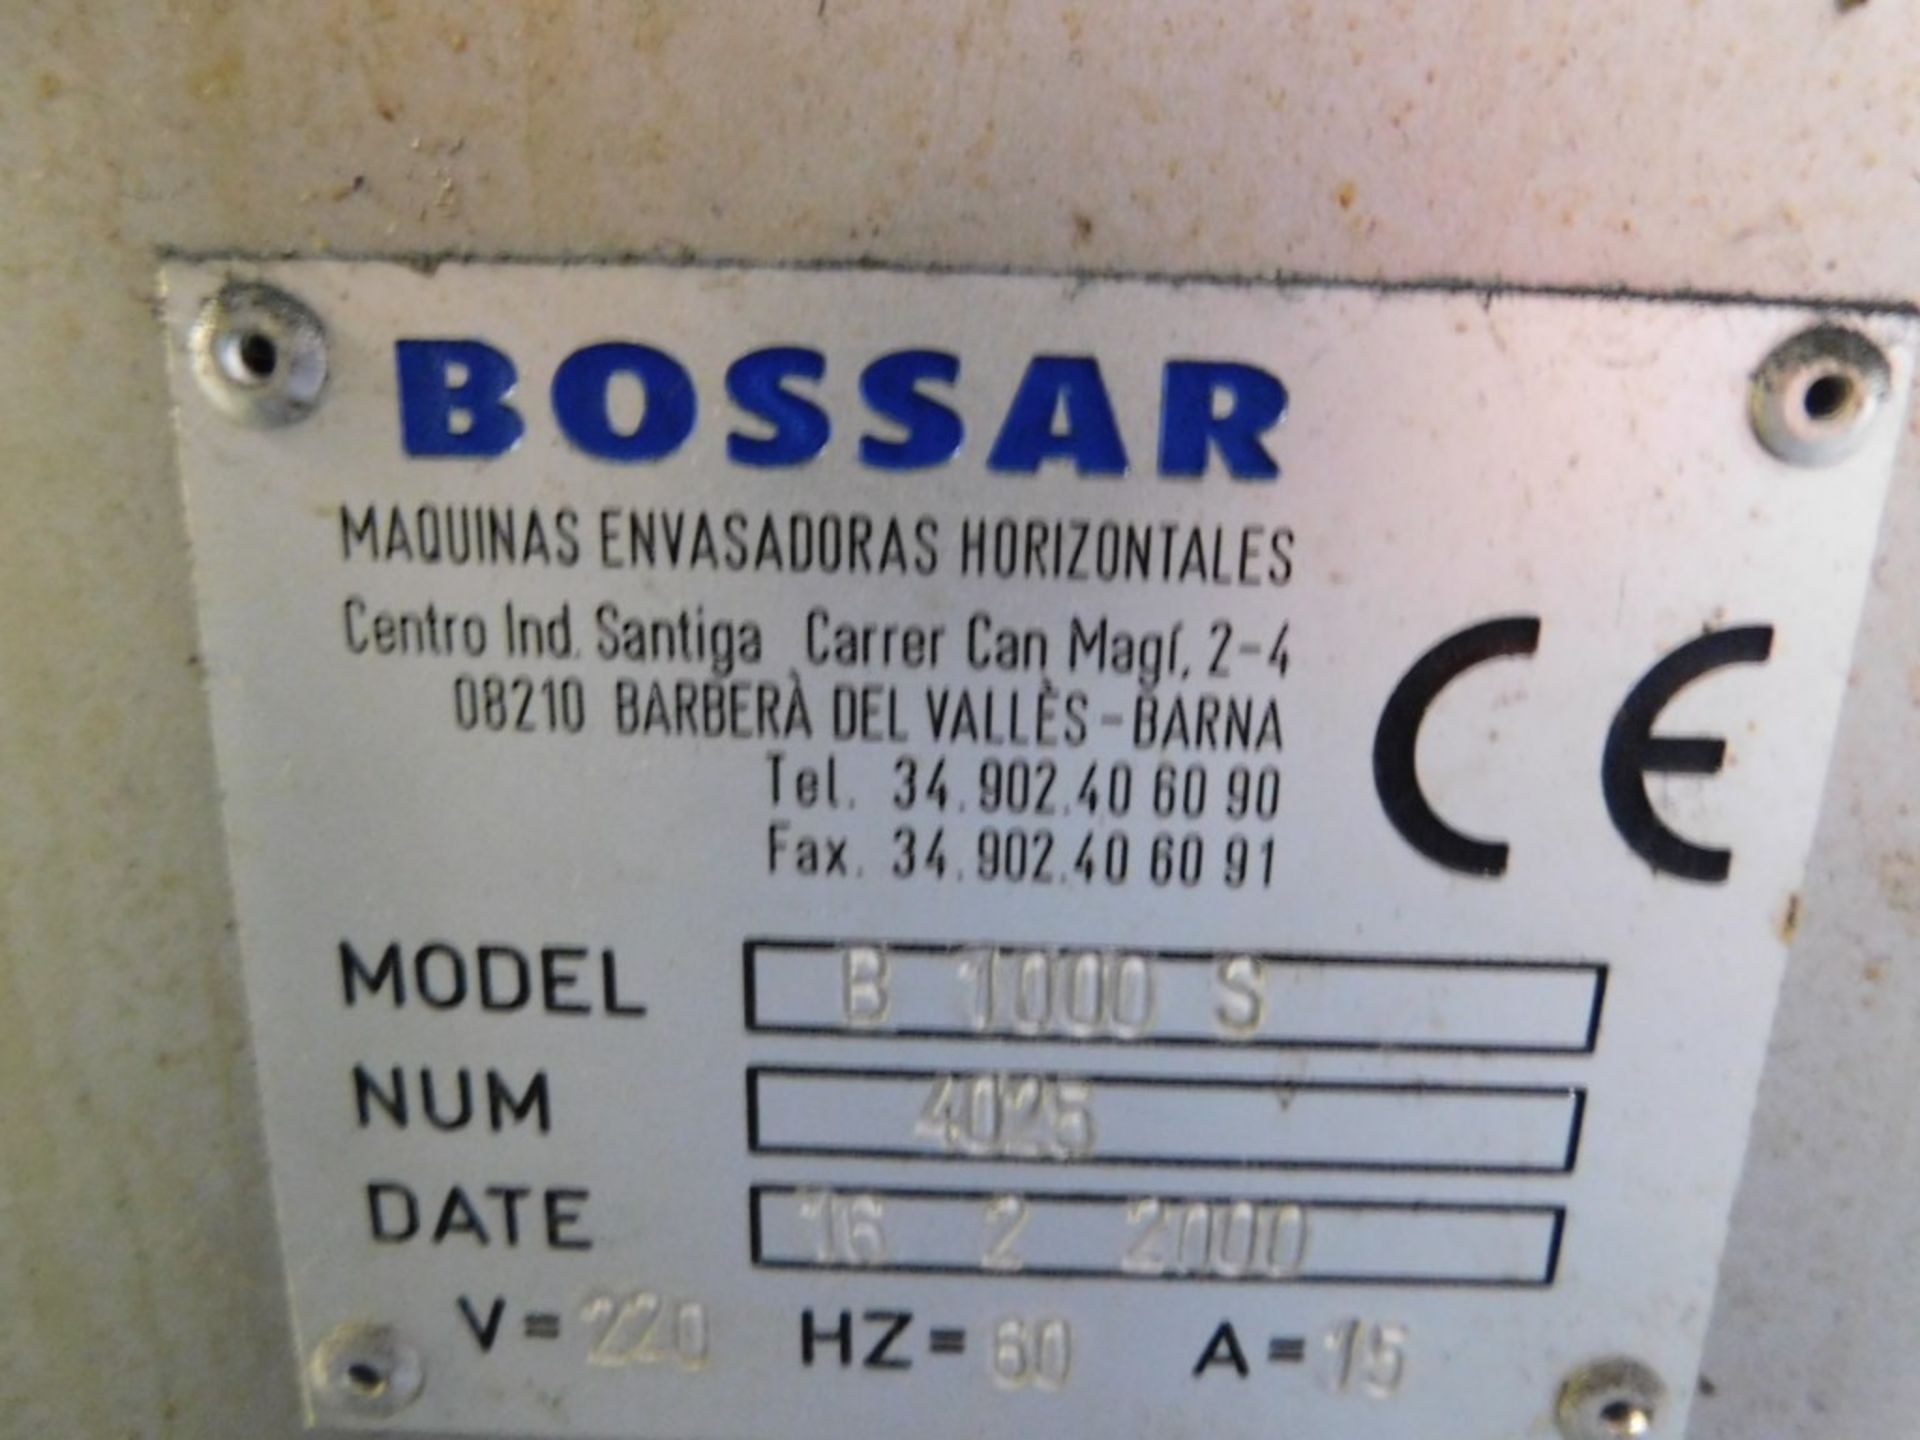 Bossar Model B-1000-S Bagging Machine, s/n 4025, Loading Fee $75.00 - Image 9 of 10